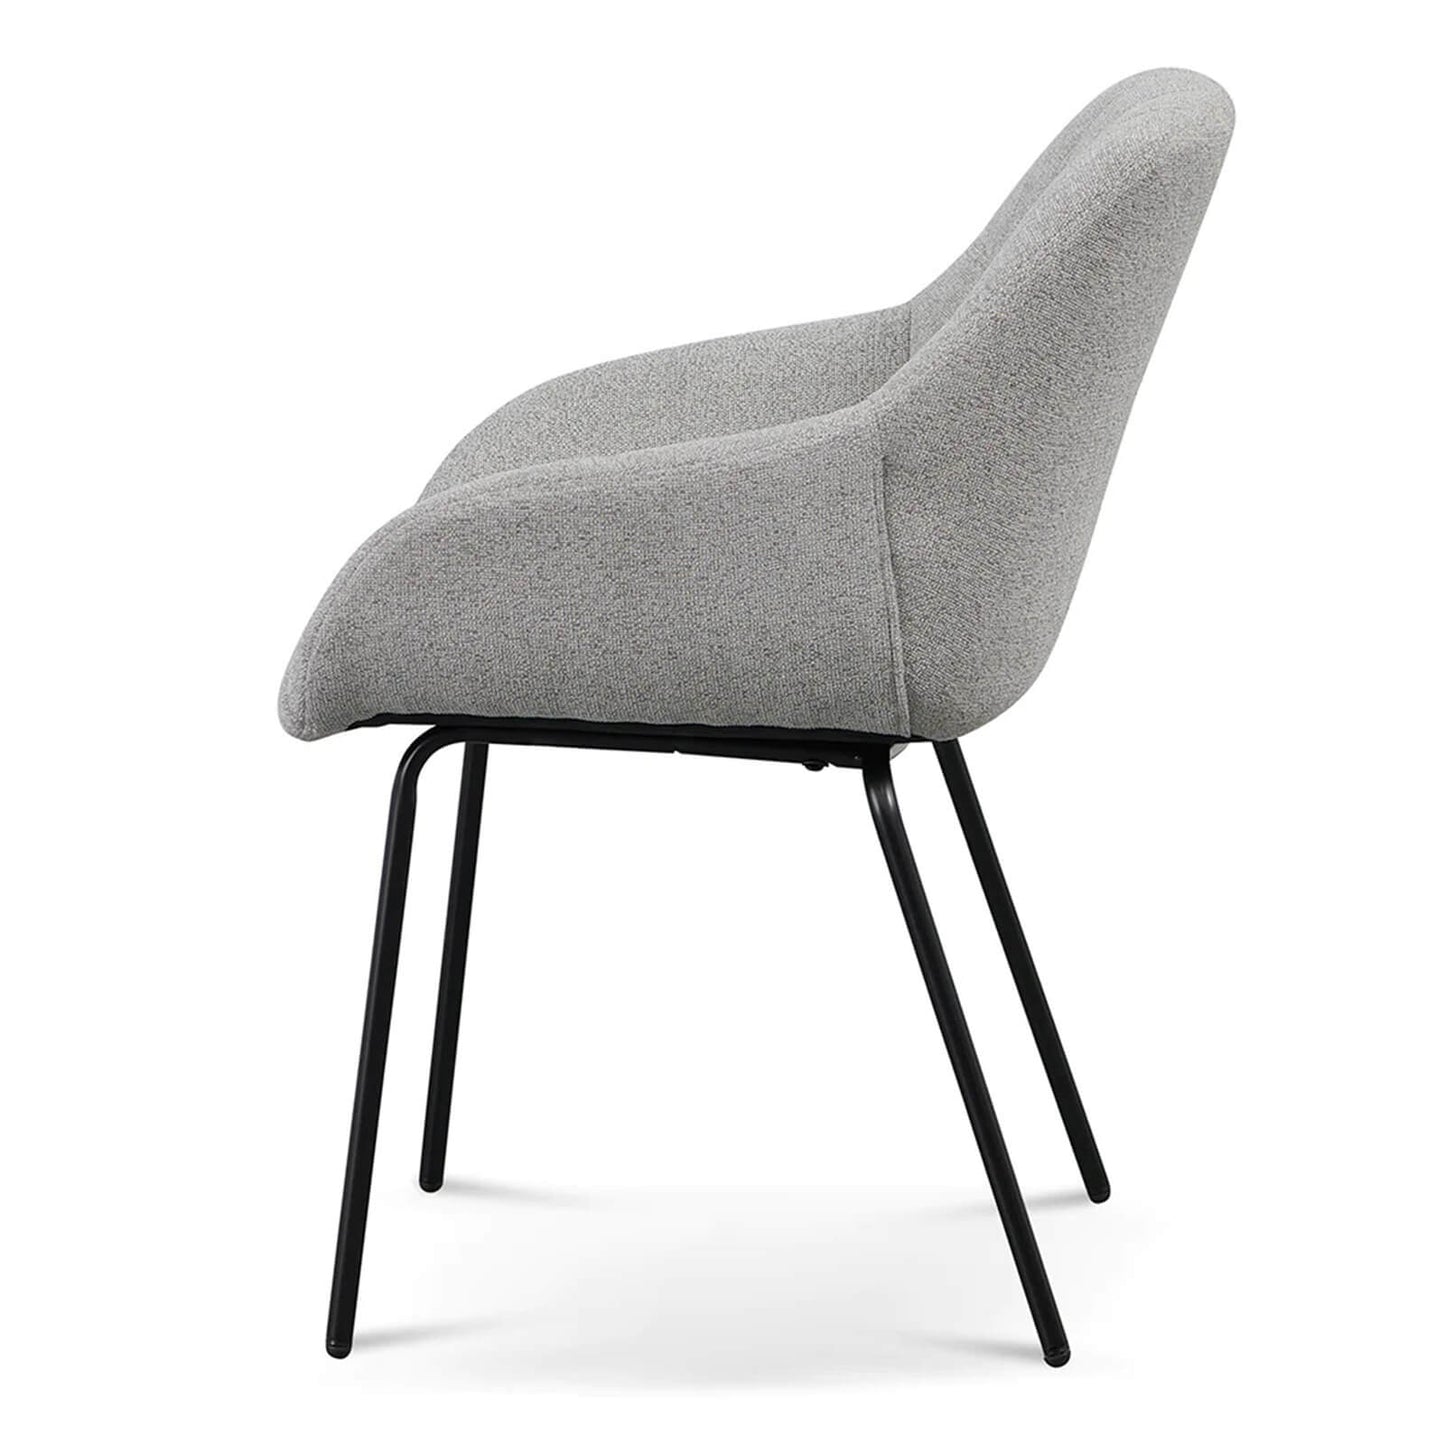 Giles | Modern Metal Grey Fabric Dining Chairs | Set Of 2 | Grey